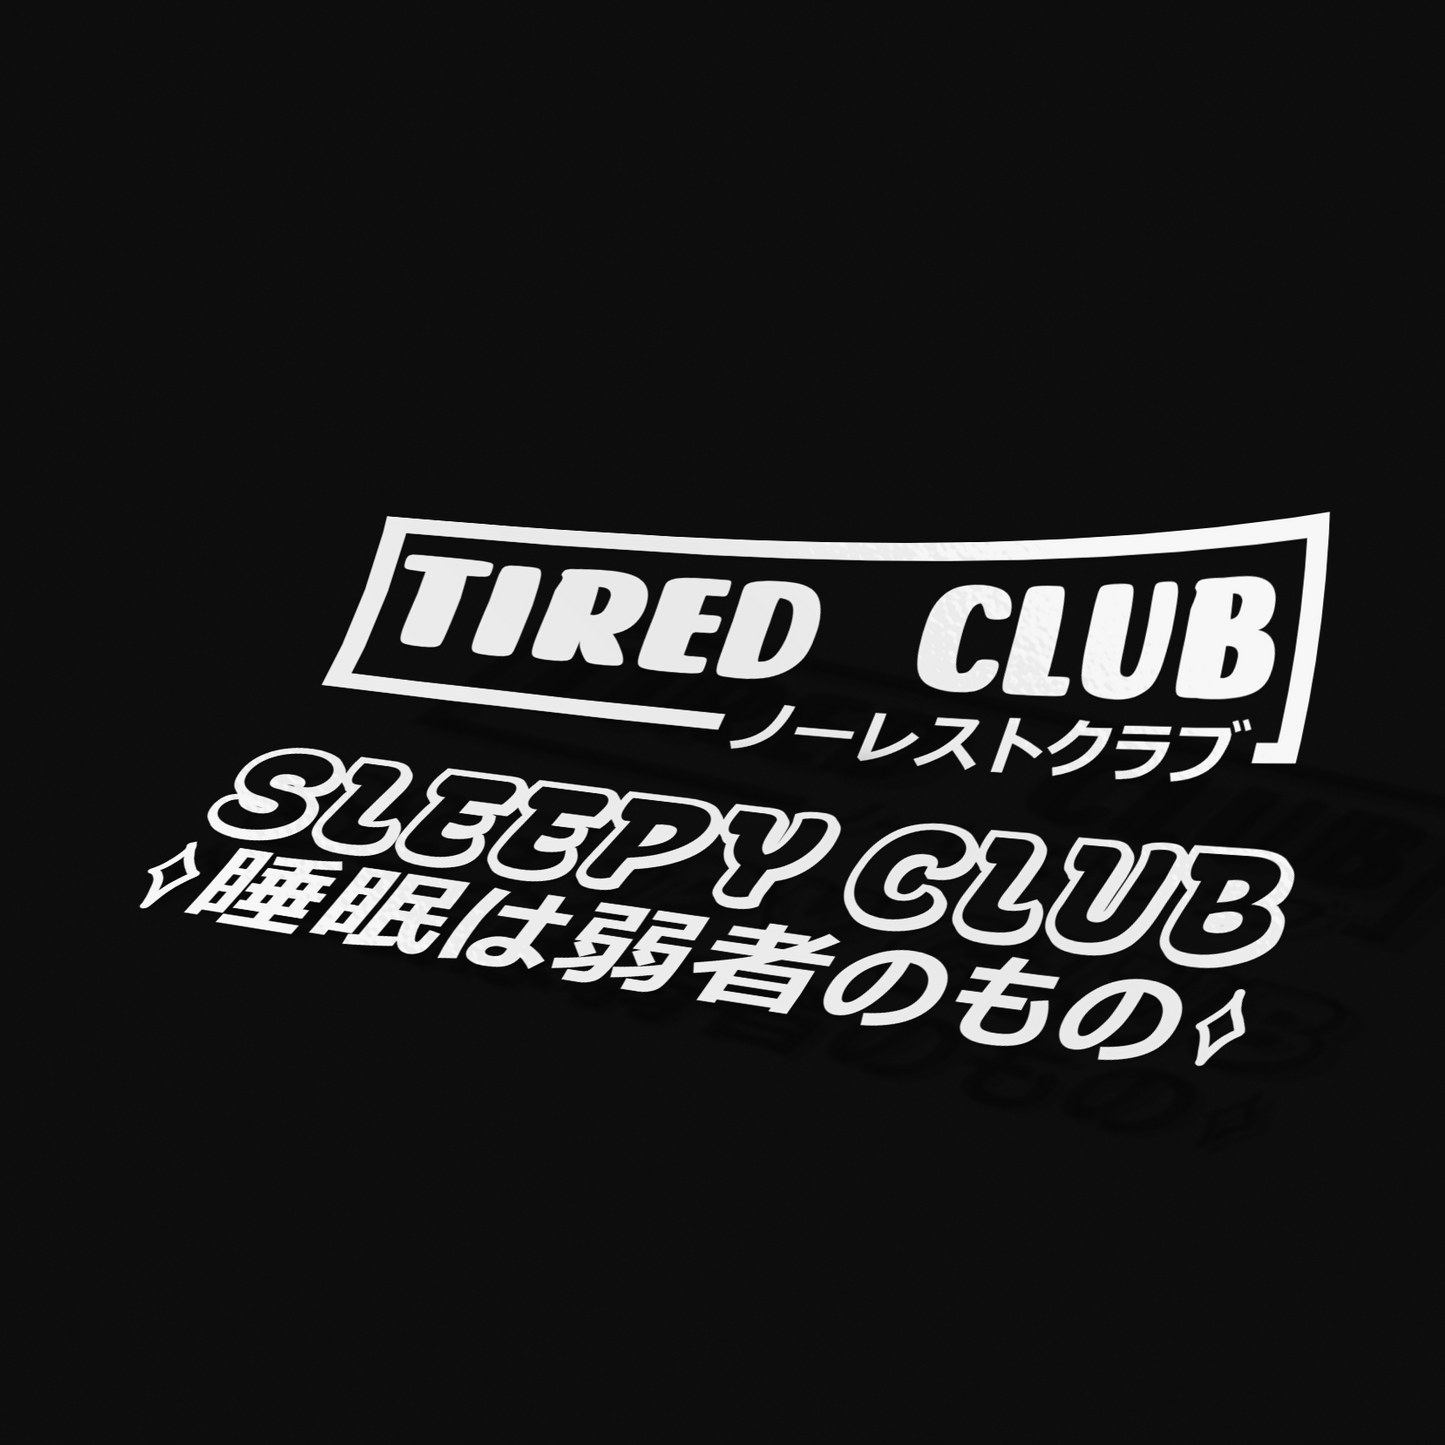 Club fatigué